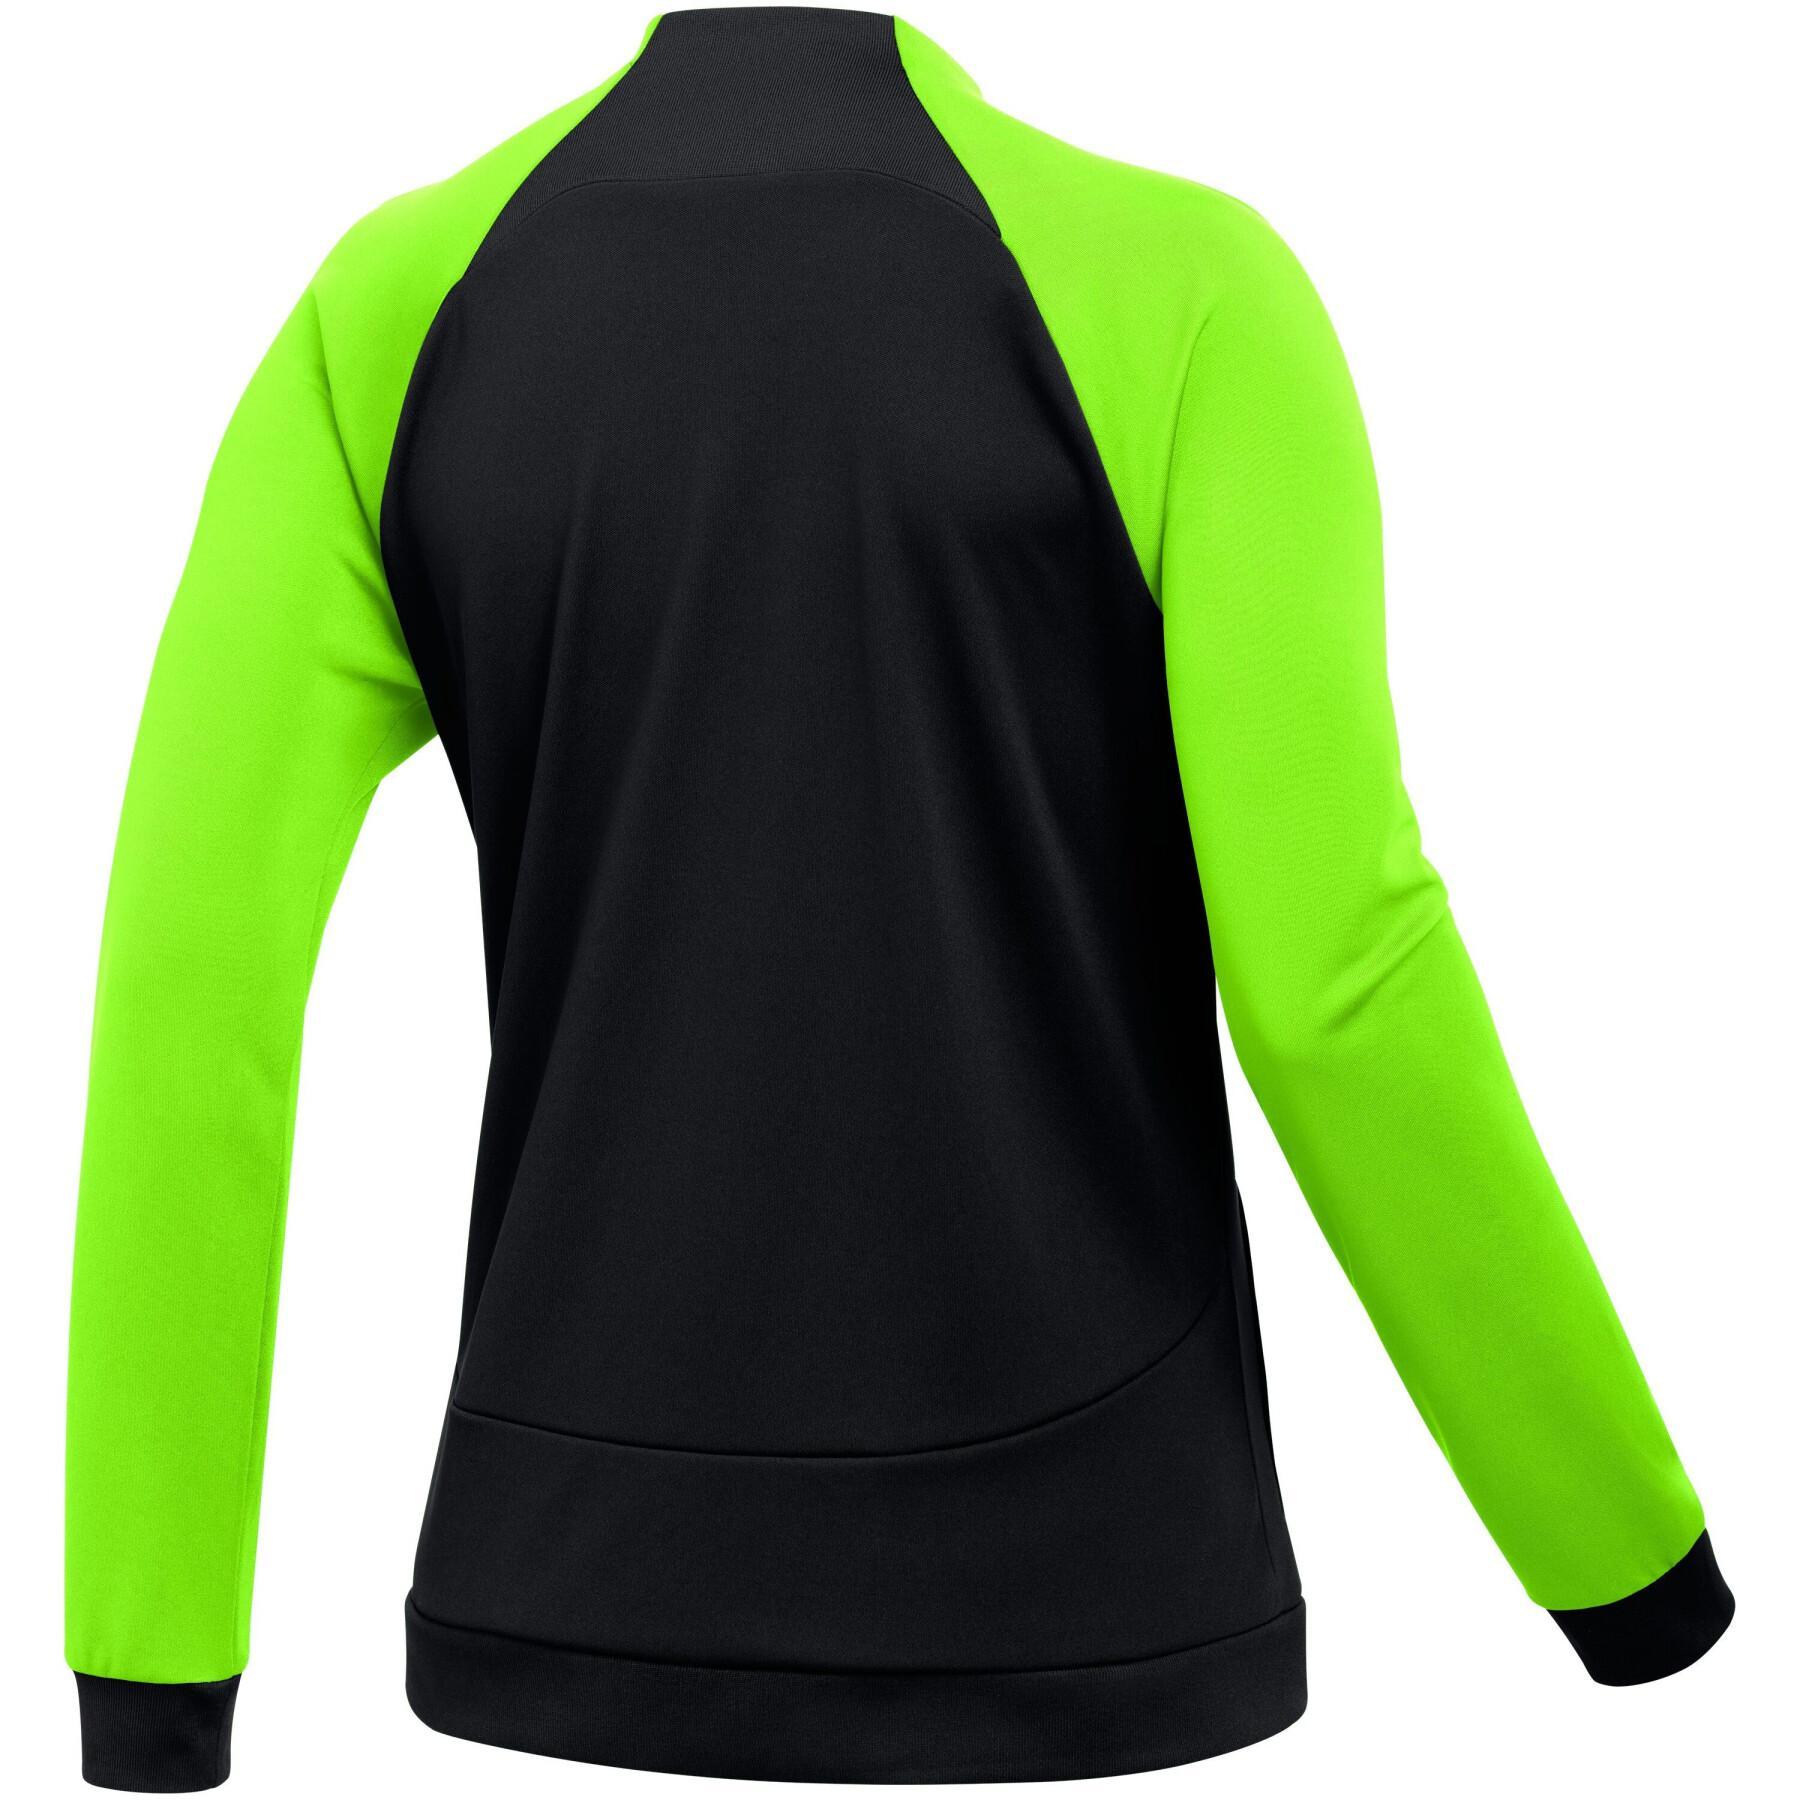 Women's sweat jacket Nike Dri-FIT Academy Pro